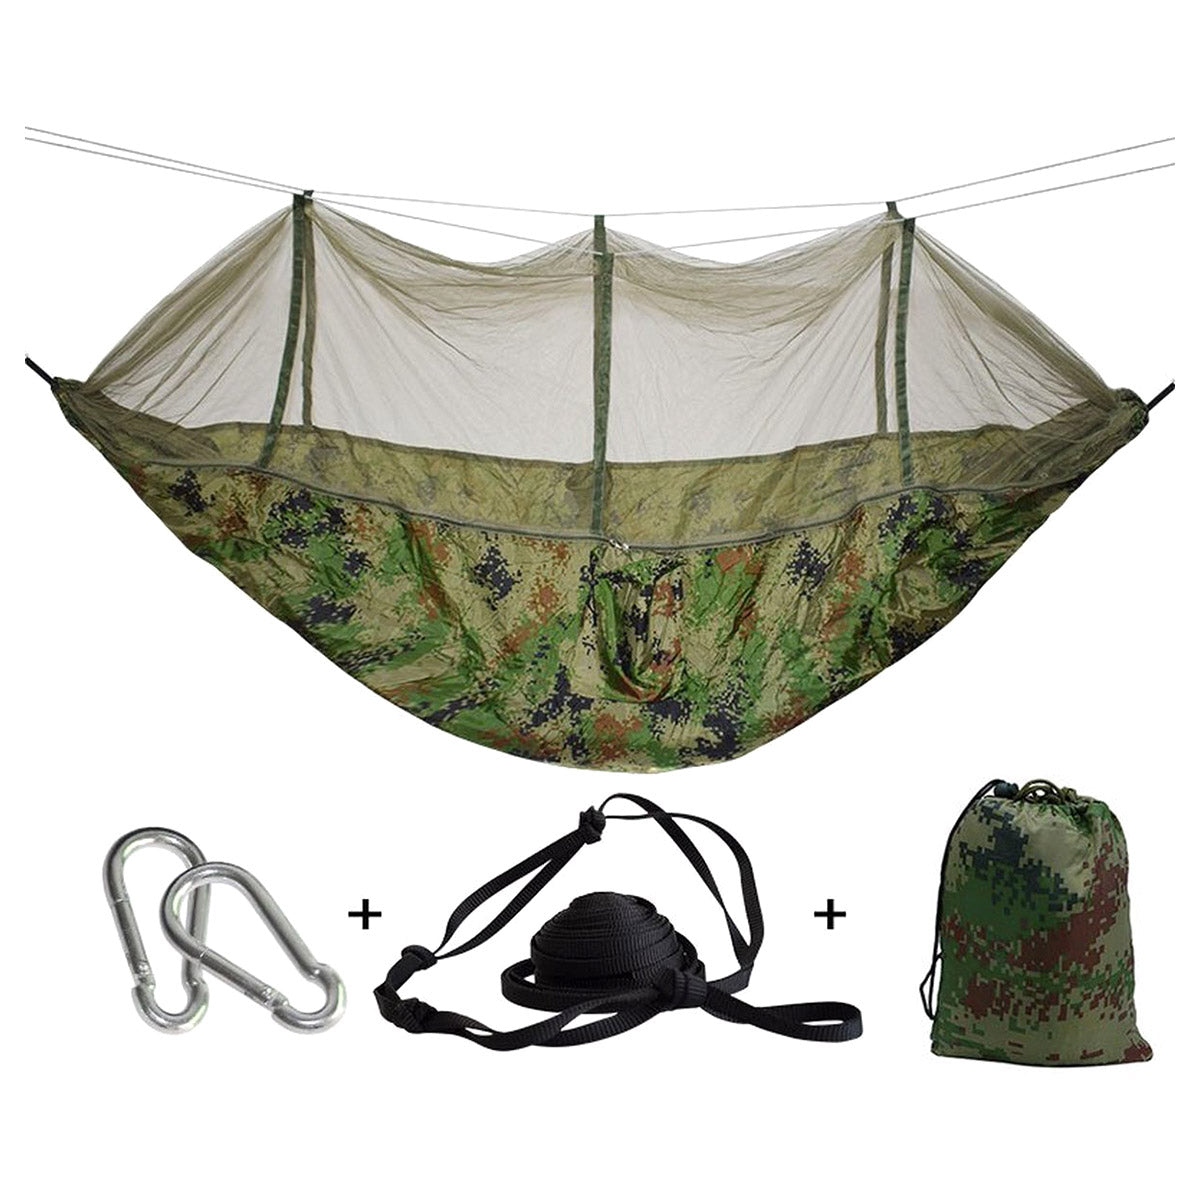 Ariko Hangmat met Muggennet in Camouflage stijl - Moskito - Hangmat - Muggennet - Klamboe Tent - Slaapmat - Muskietennet - Muskietengaas - Campingbedje - Slaapzak - Zwevend - 150KG - Camouflage